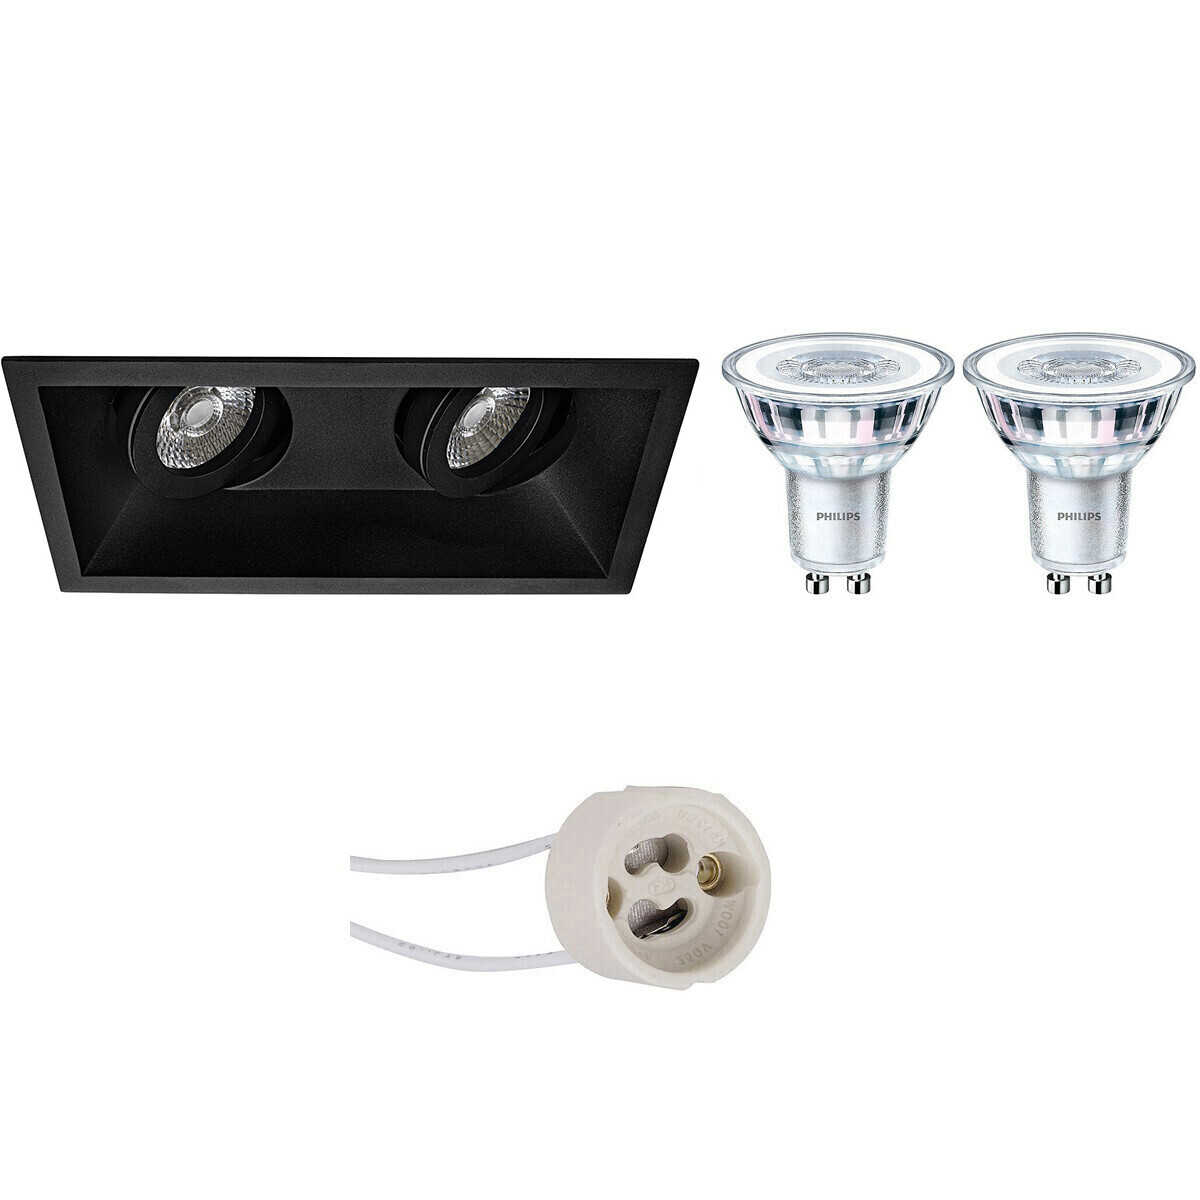 BES LED LED Spot Set - Pragmi Zano Pro - GU10 Fitting - Inbouw Rechthoek Dubbel - Mat Zwart - Kantelbaar - 185x93mm - Philips - CorePro 827 36D - 4W - Warm Wit 2700K - Dimbaar